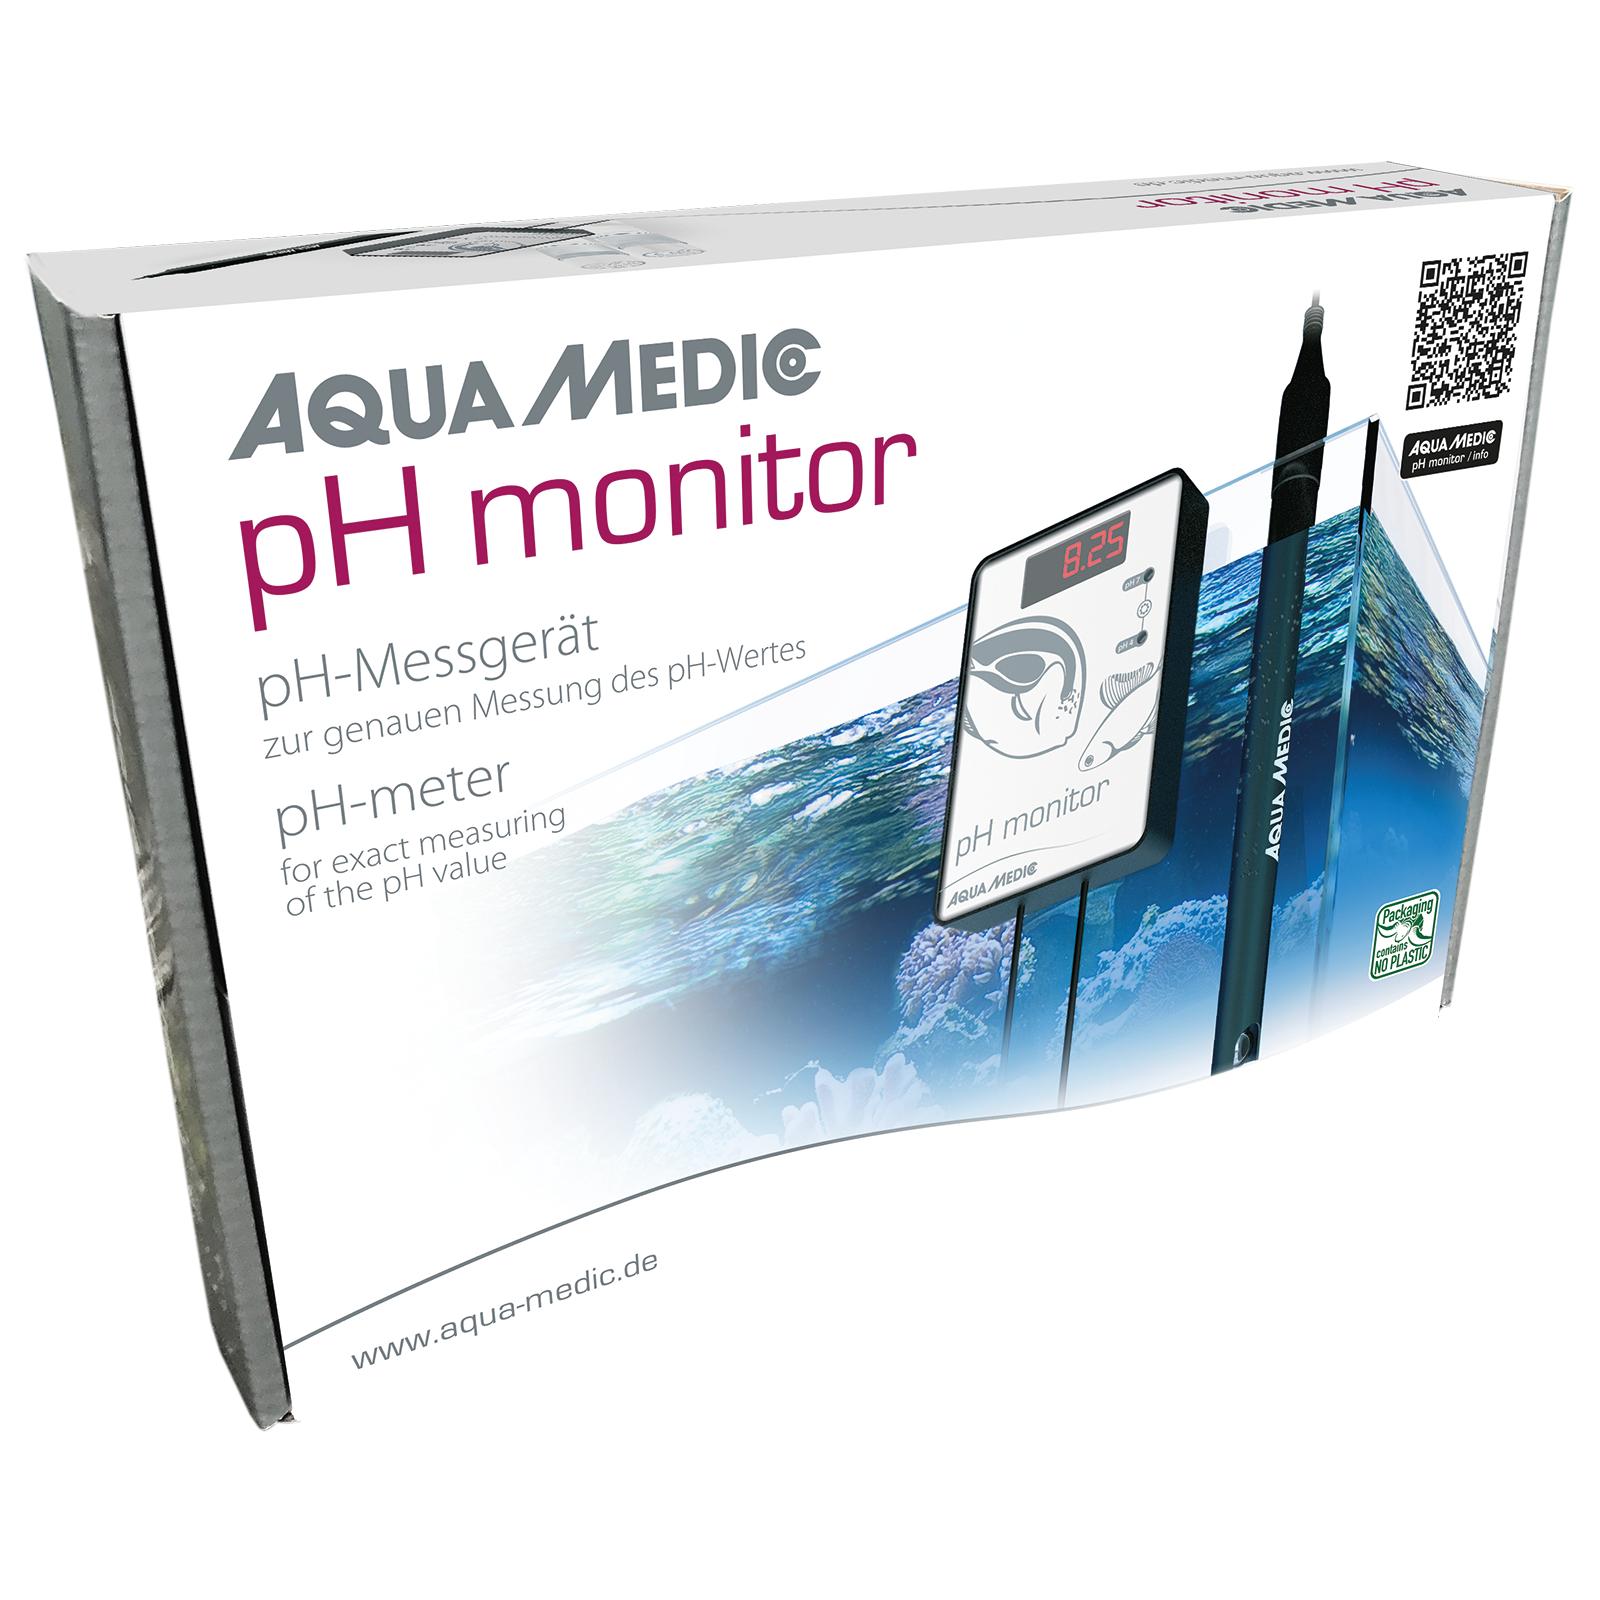 pH метр для аквариума Aqua Medic pH monitor